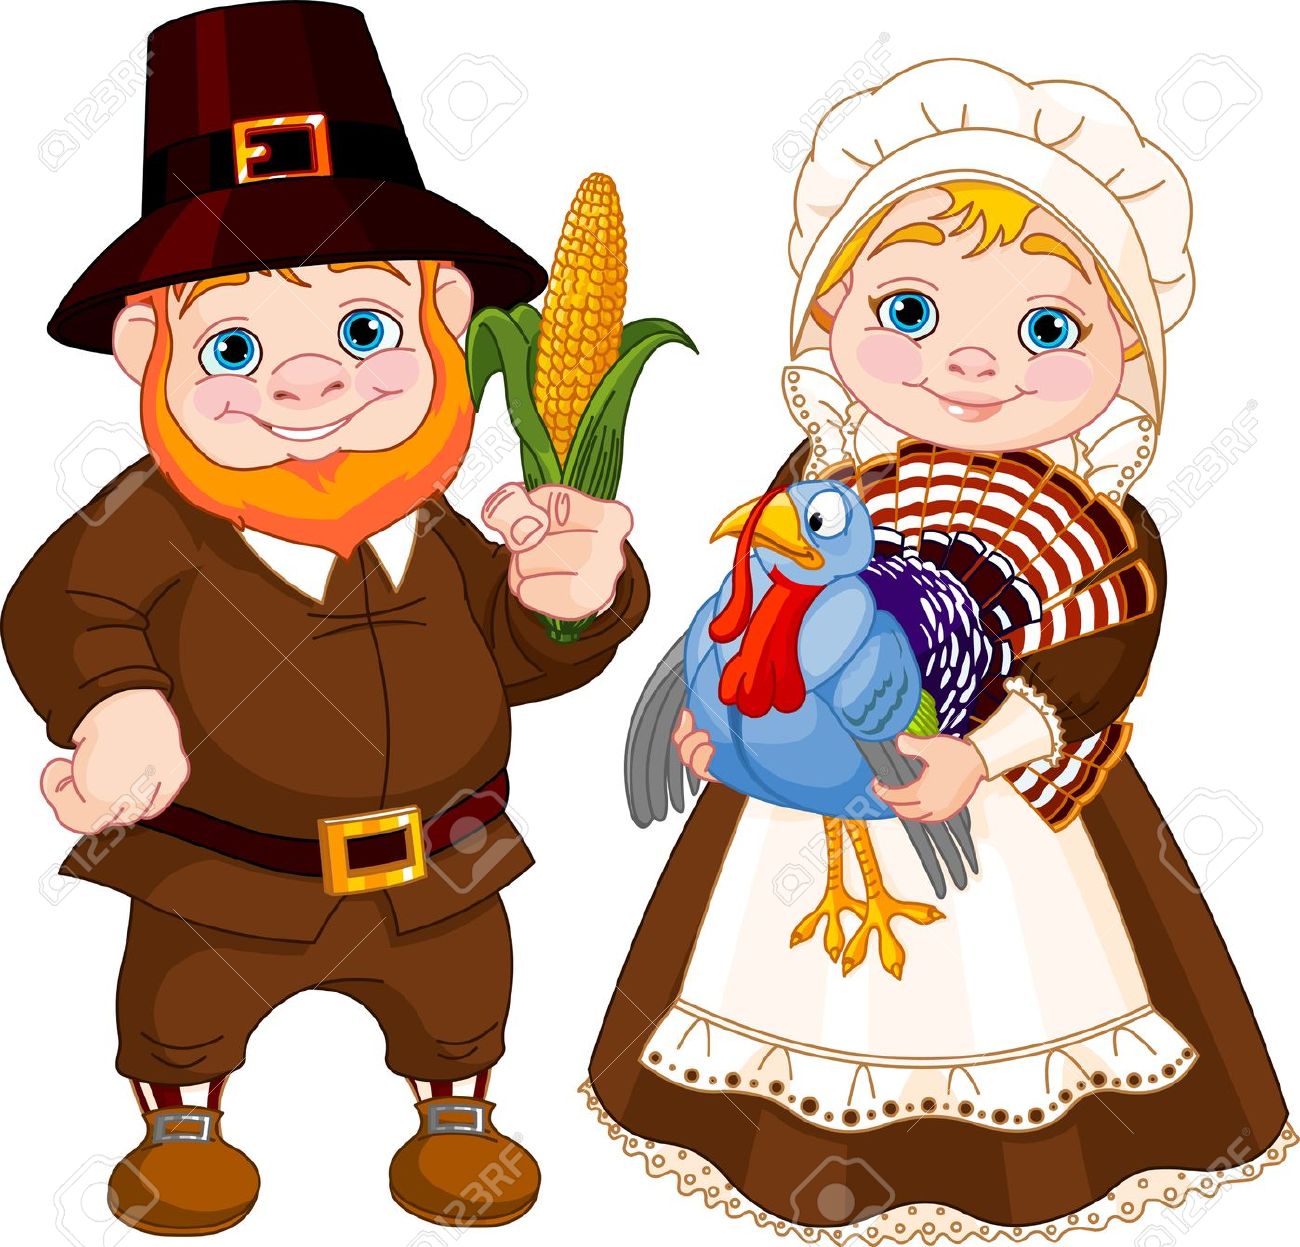 15793756-Illustration-of-Cute-Pilgrims-Couple-Stock-Vector-thanksgiving-cartoon-pilgrim